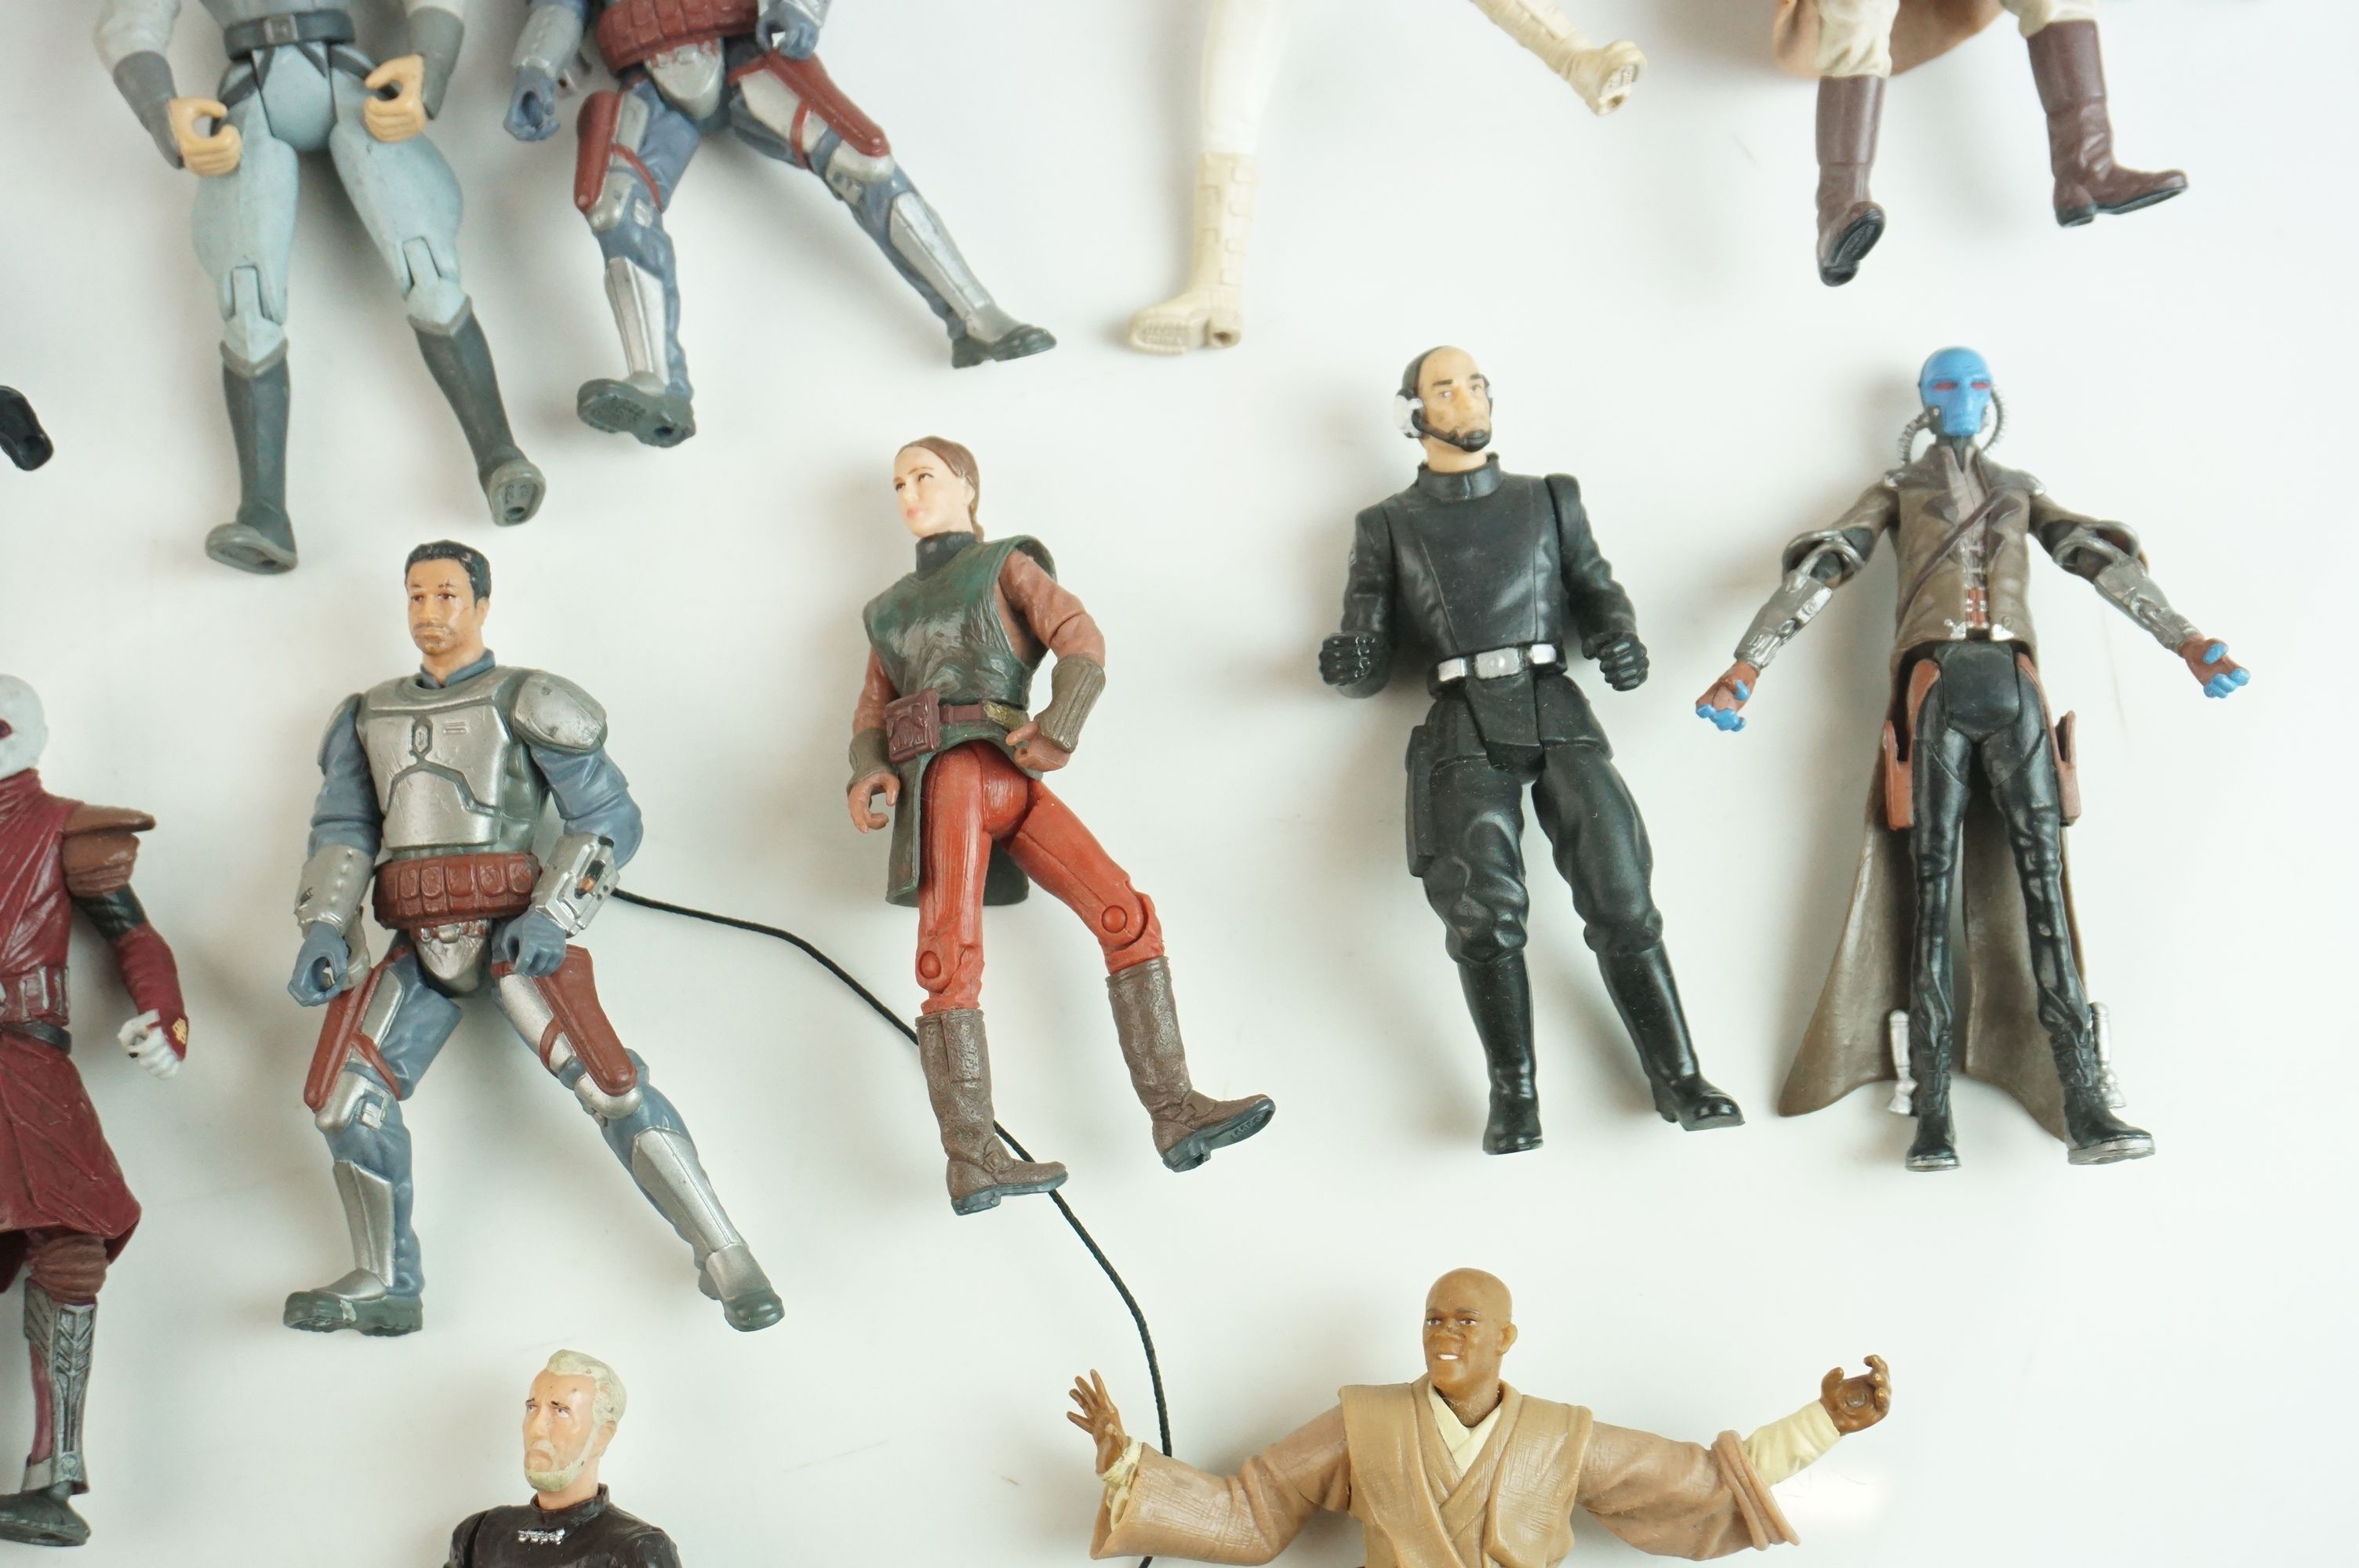 20 x Playworn Hasbro Star Wars action figures to include Mace Windu, Jango Fett, Anakin Skywalker, - Image 3 of 8